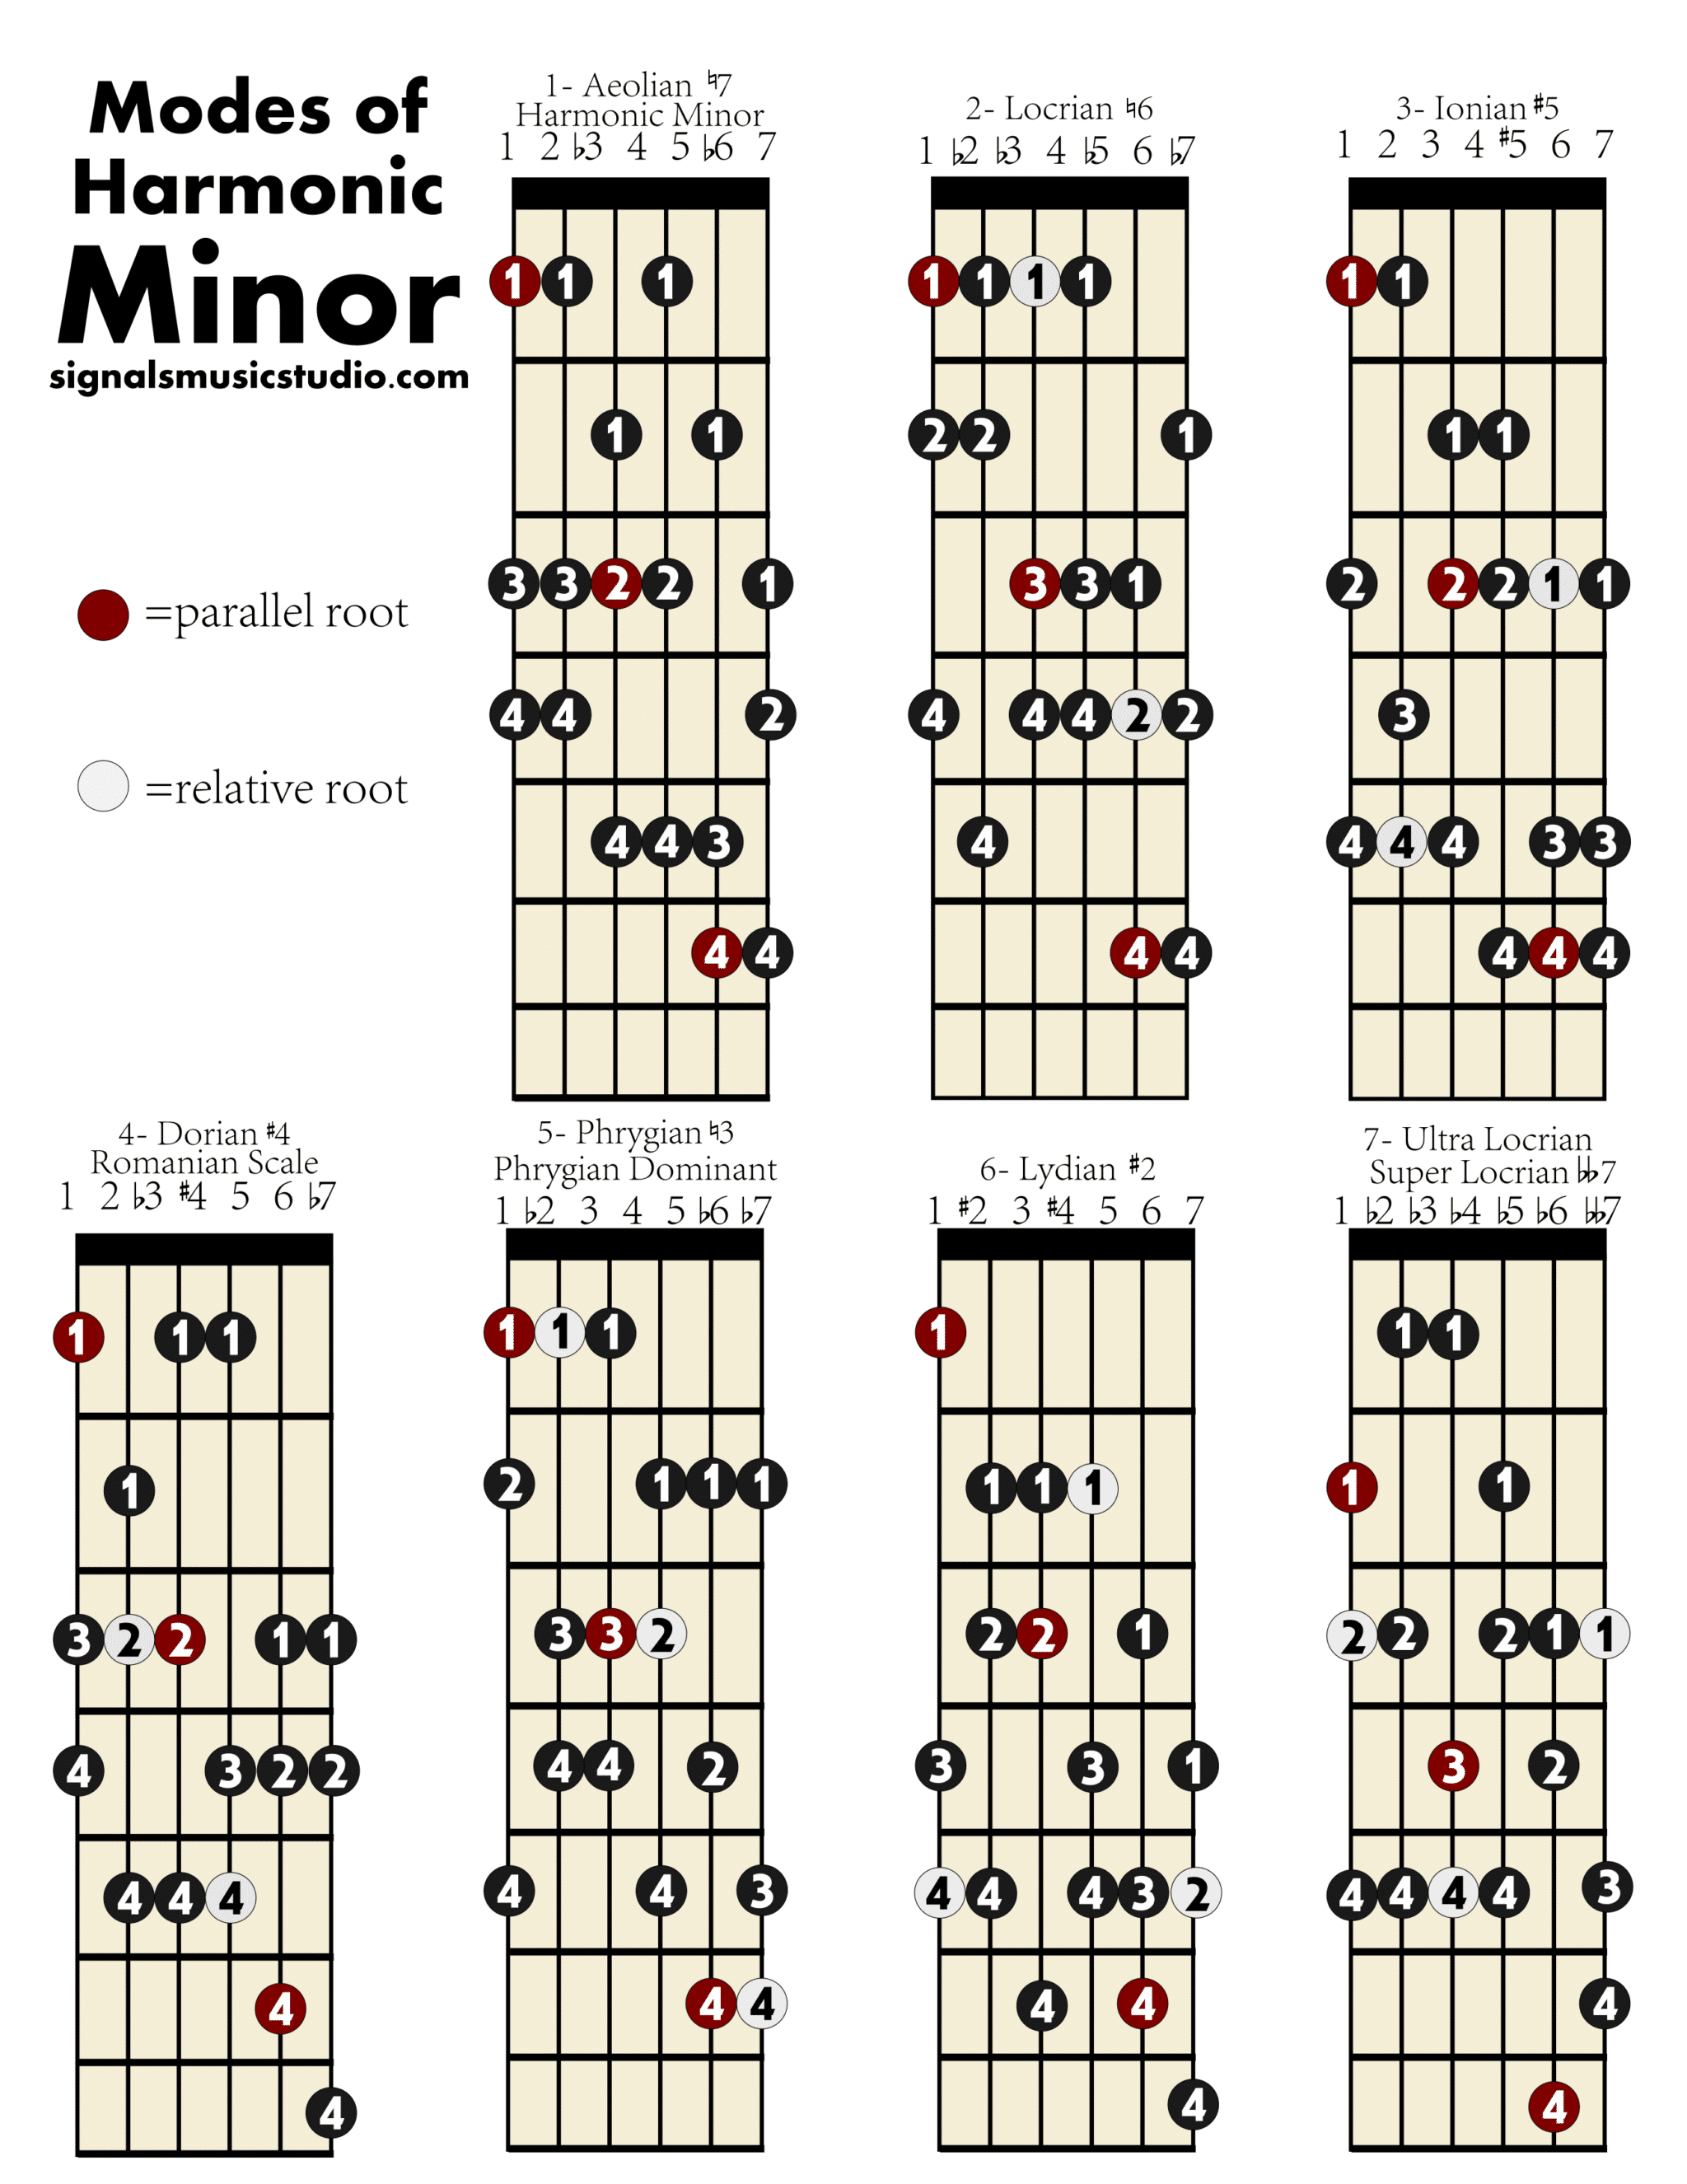 harmonic minor modes